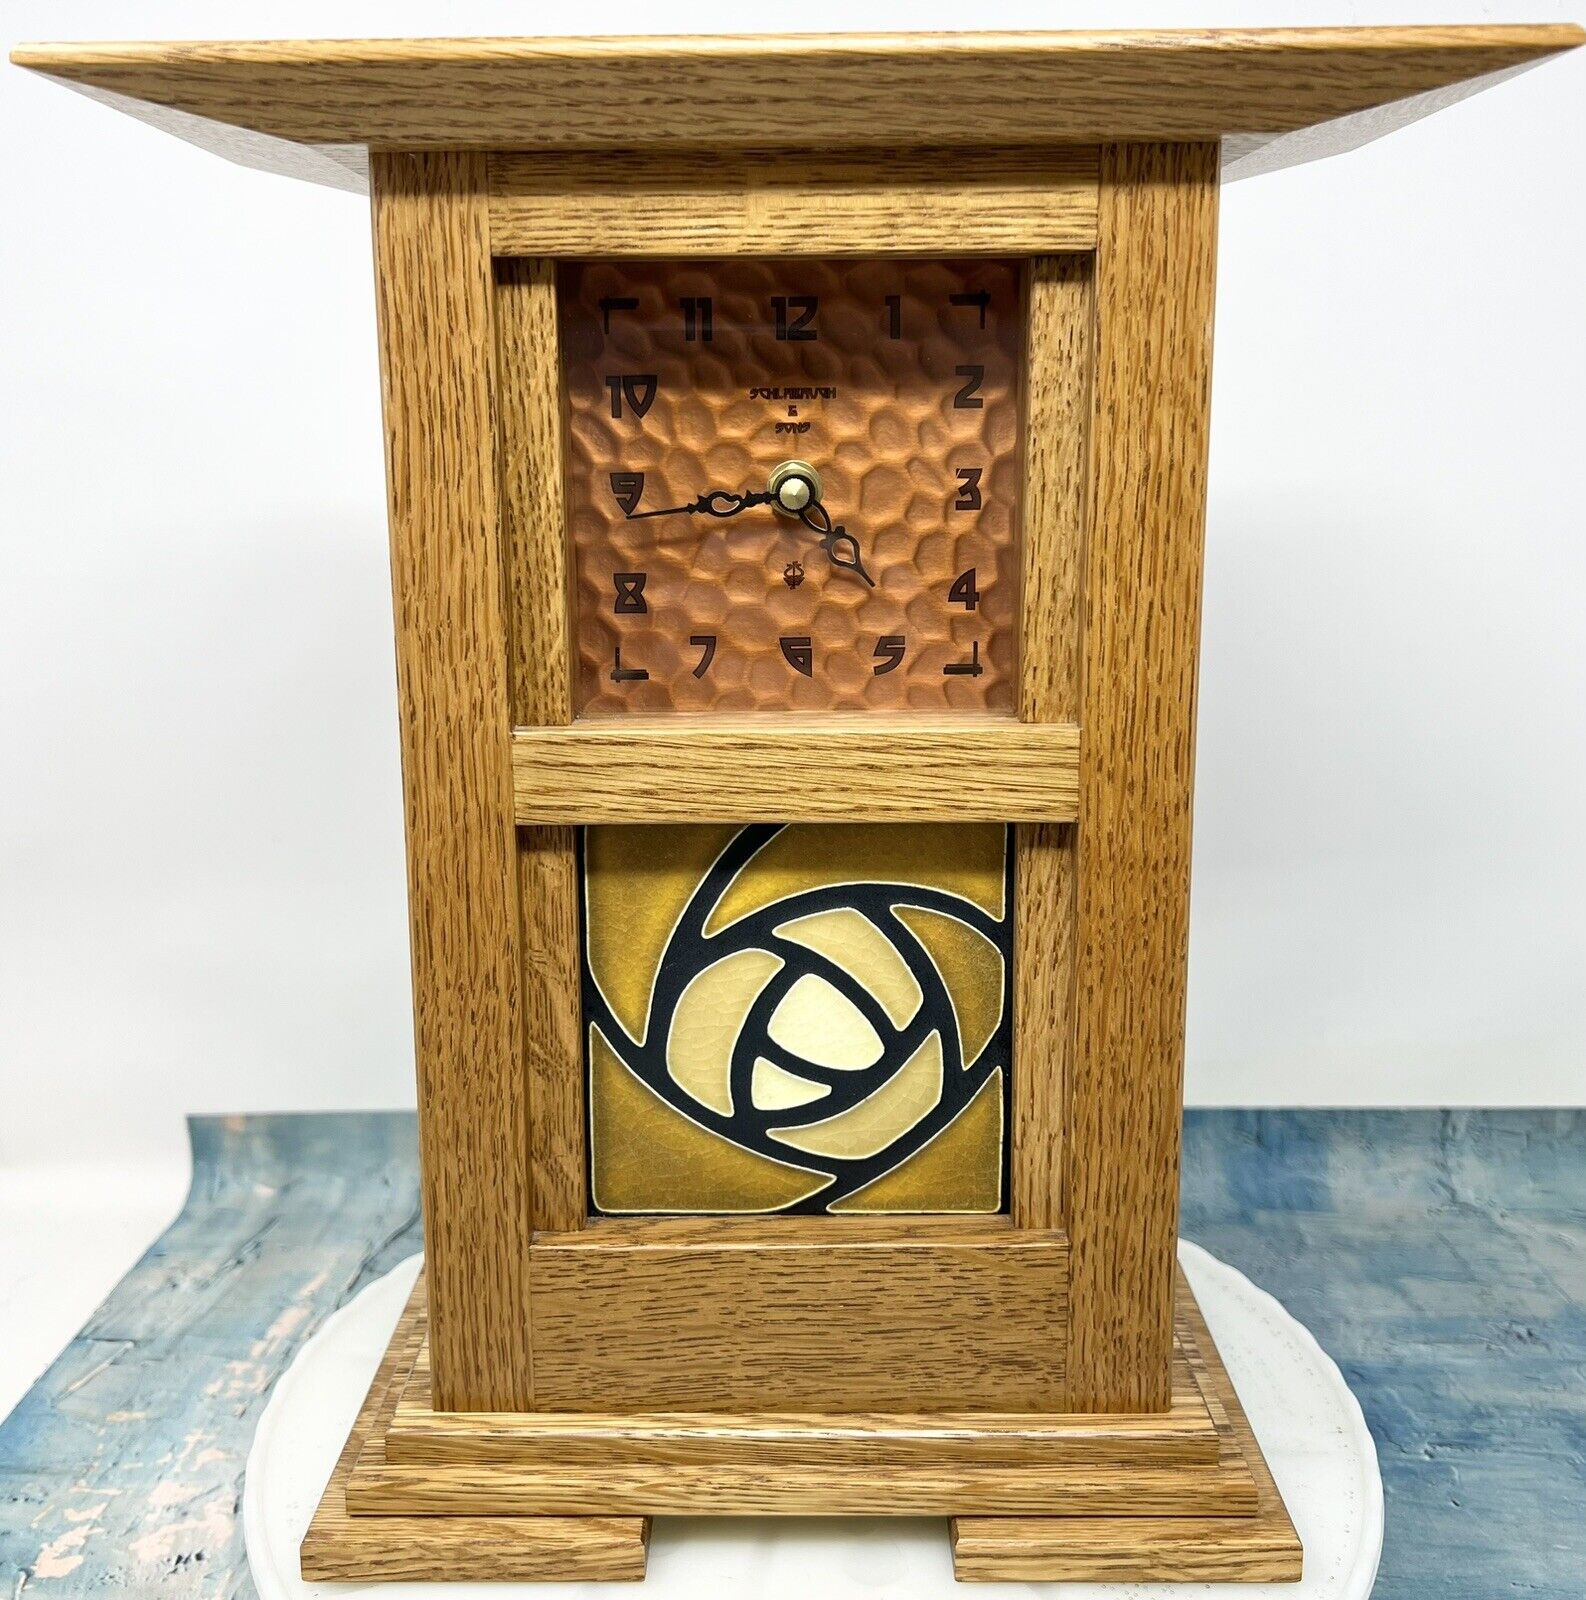 Schlabaugh And Sons Arts Crafts Decorative Clock Motawi Tile Oak Finish Works